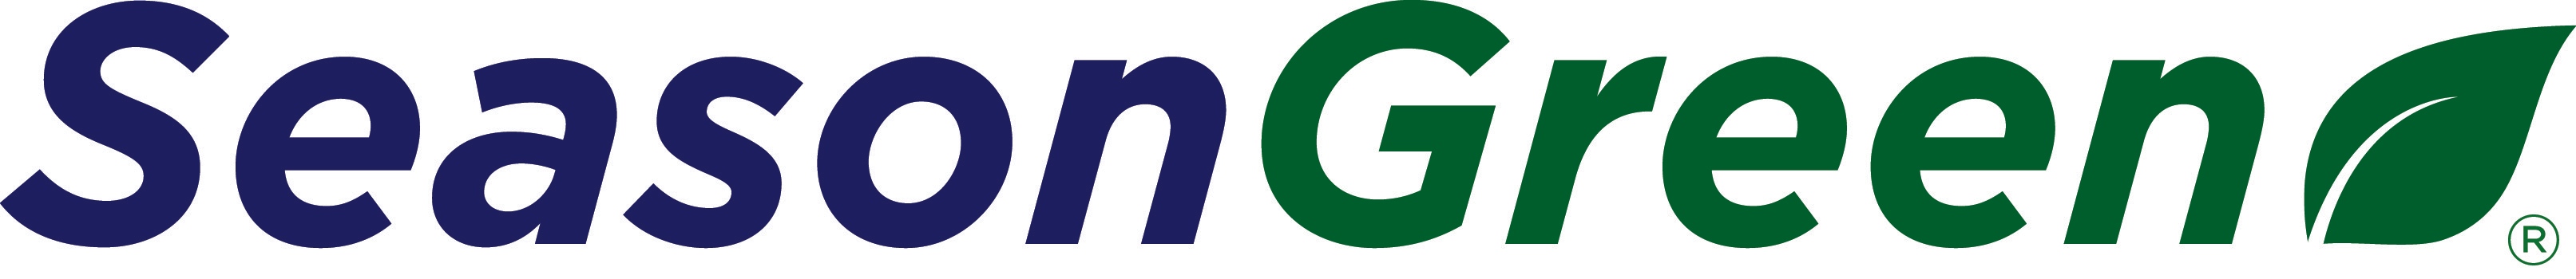 seasongreen professional lawn care services logo